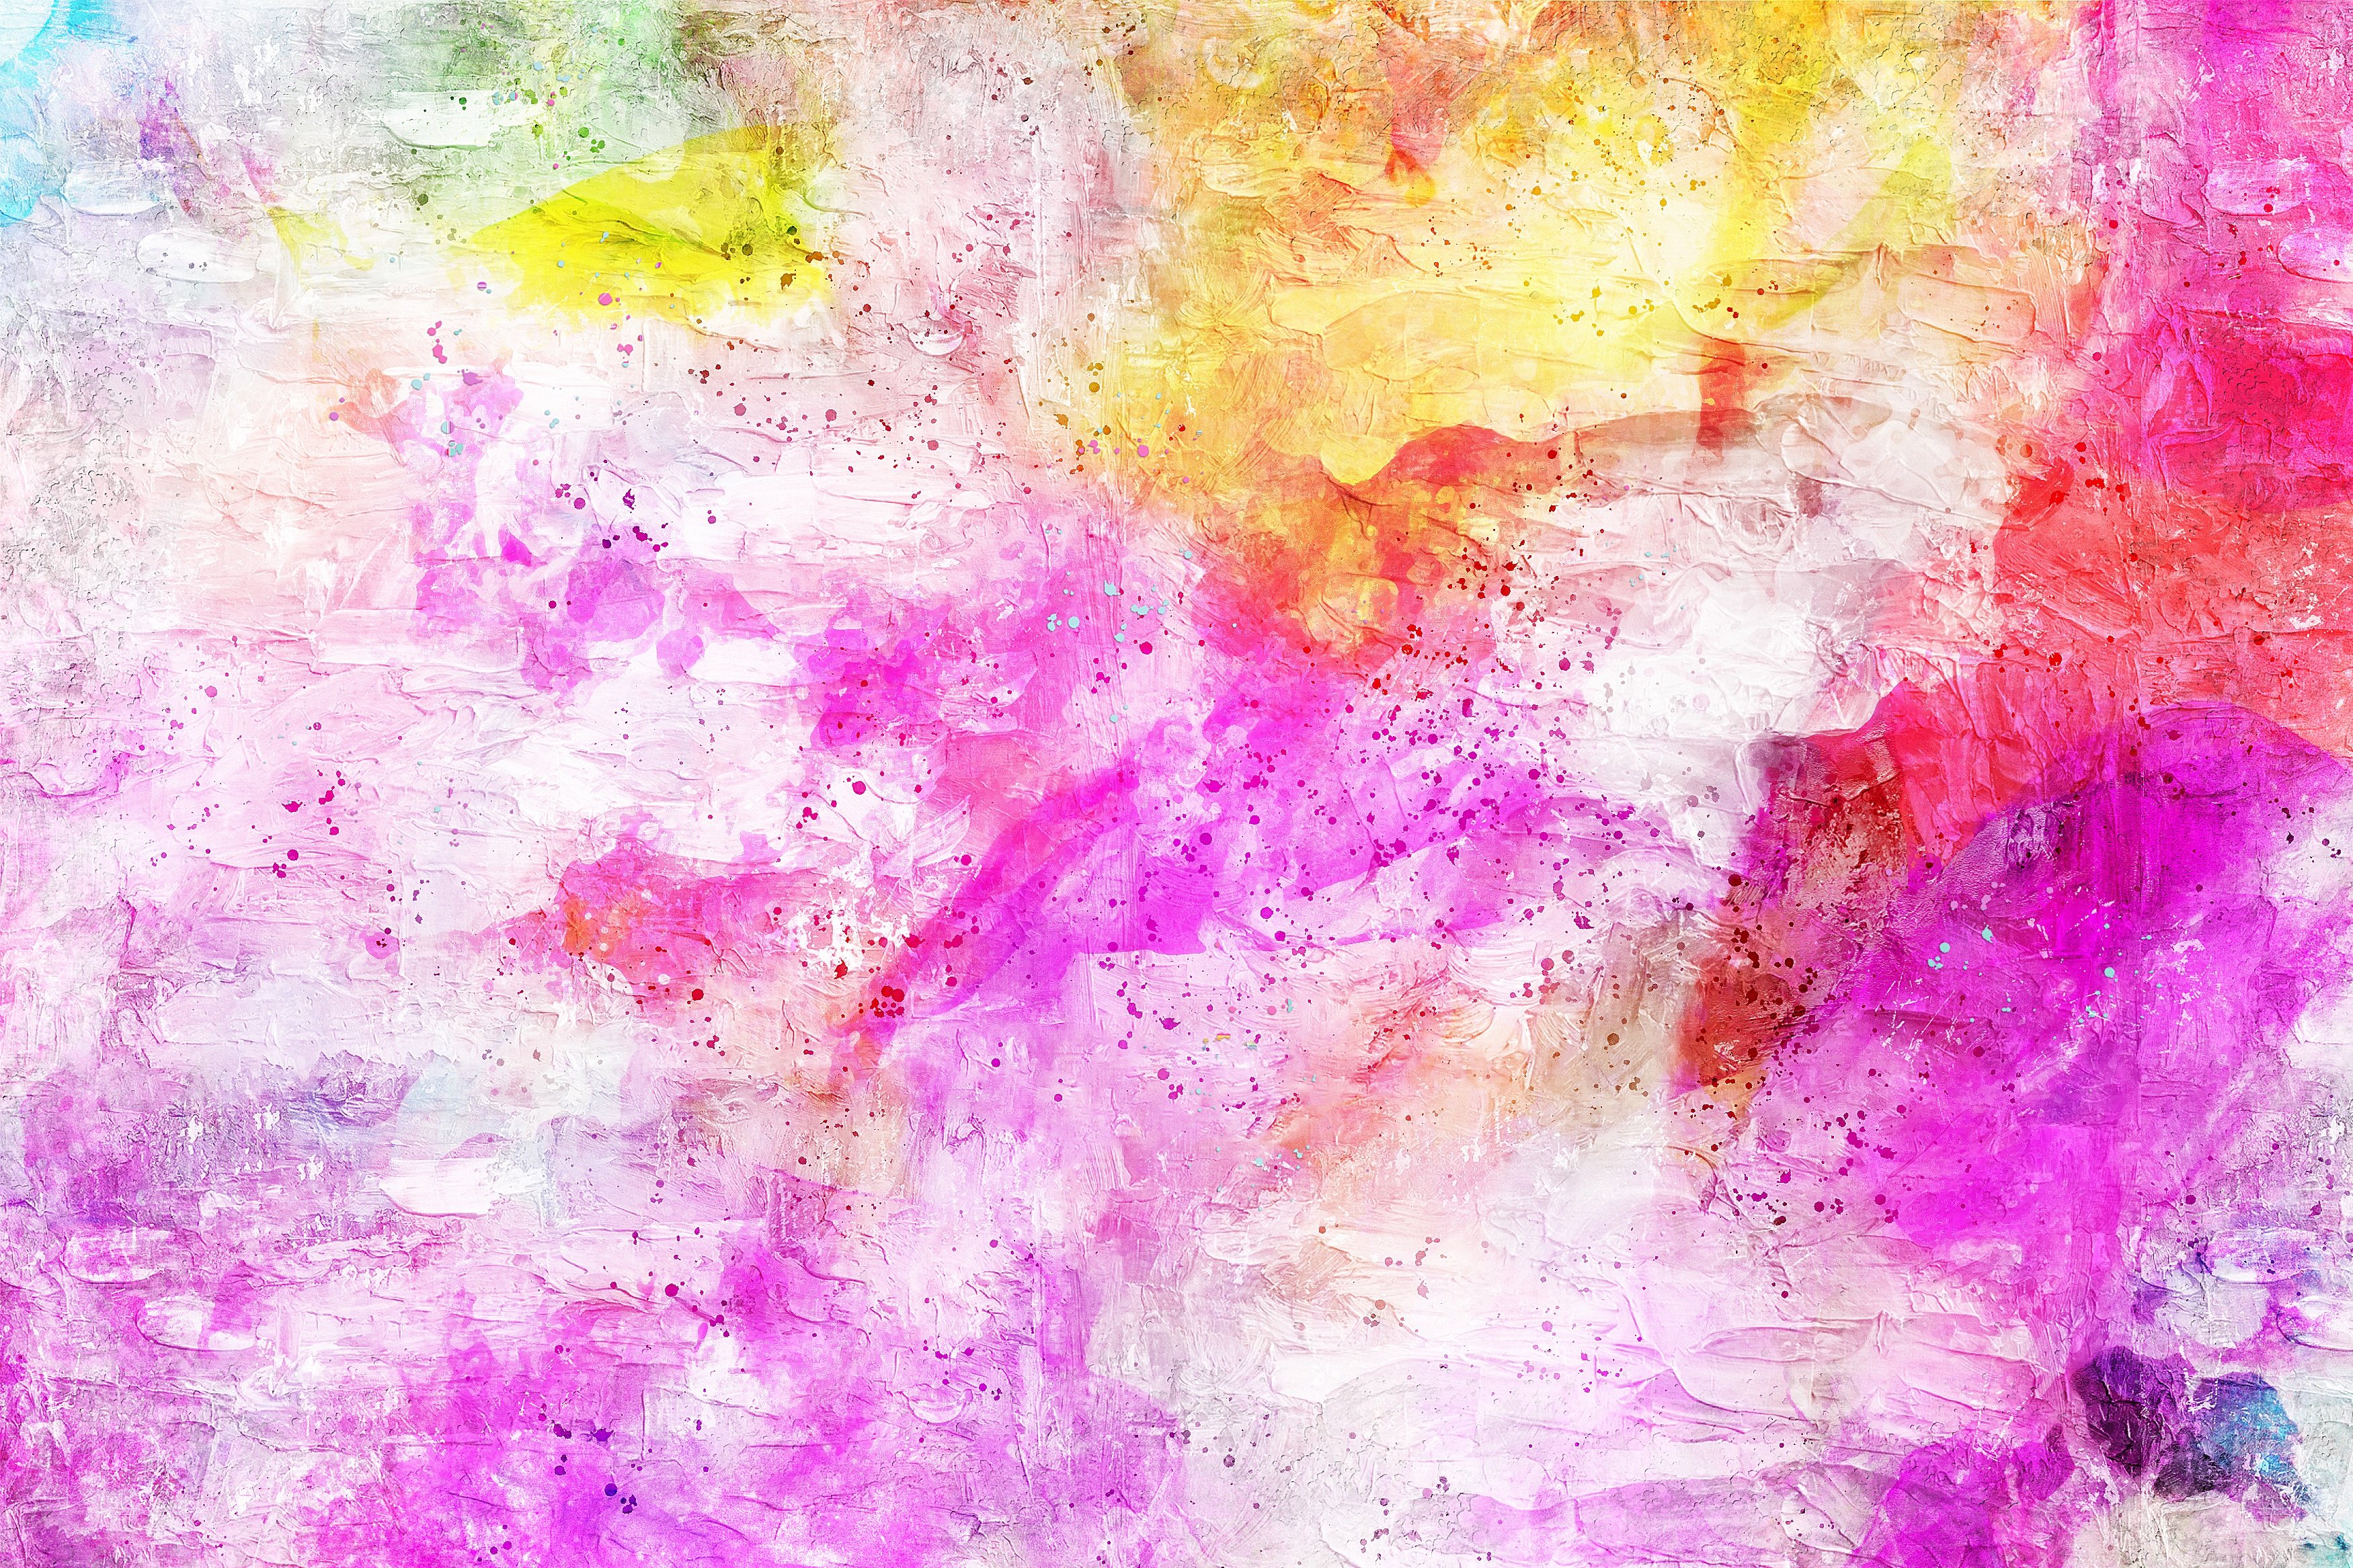 light, paint, pink, texture, textures, irregularities, light coloured, watercolor